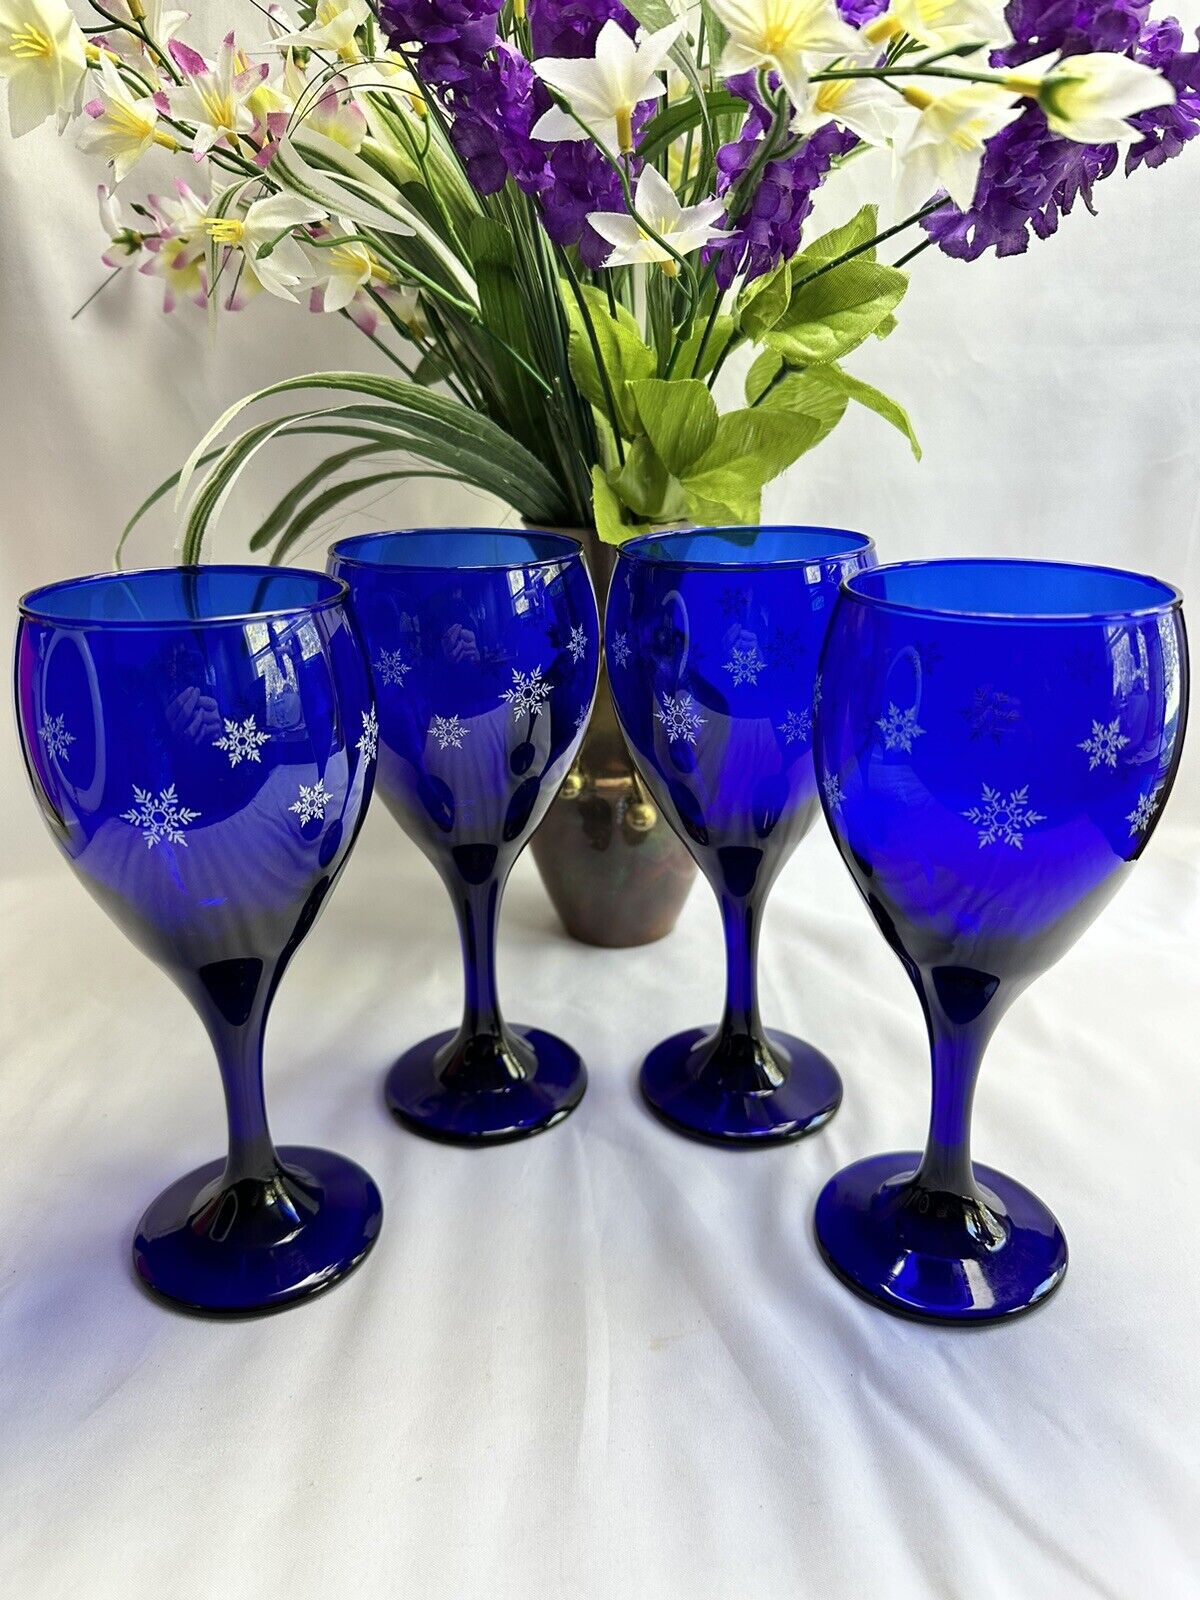 Vintage Colbalt Blue Wine Goblets with Snowflakes 12 oz (4) Original Packaging